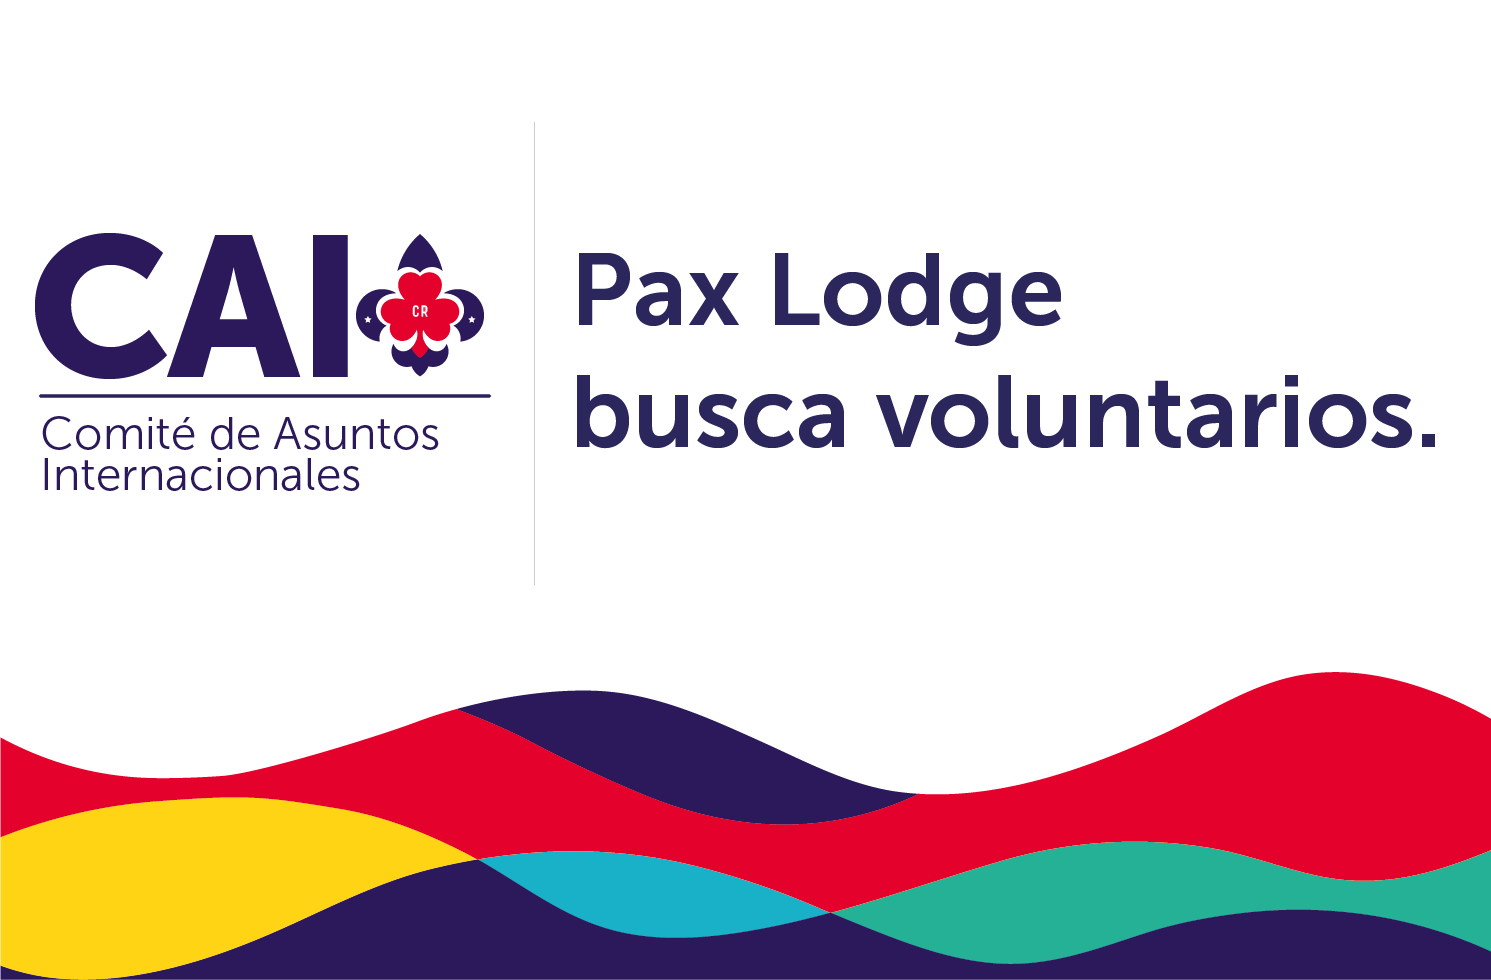 Pax Lodge